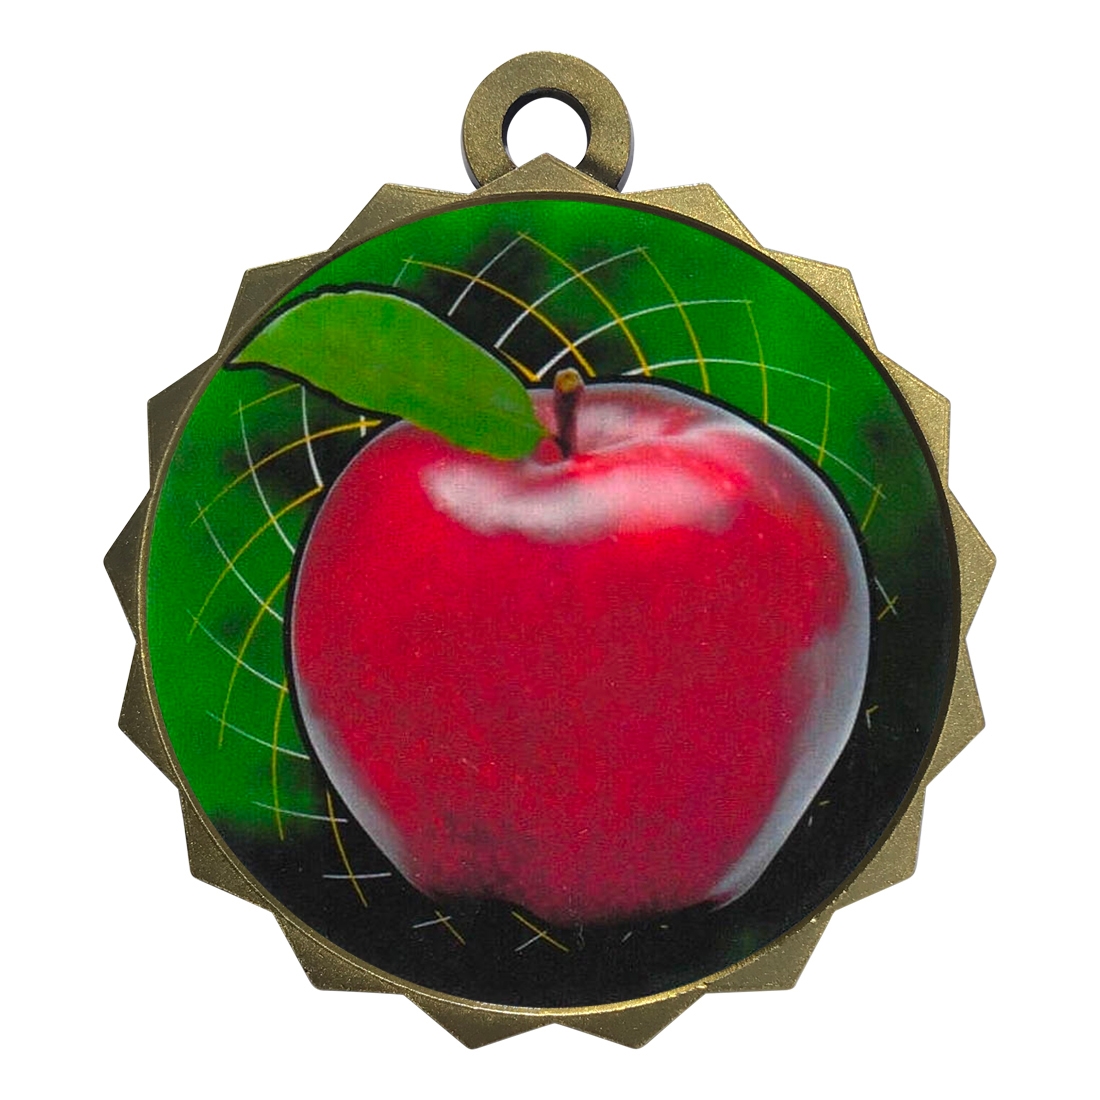 2-1/4" Scholastic Apple Medal